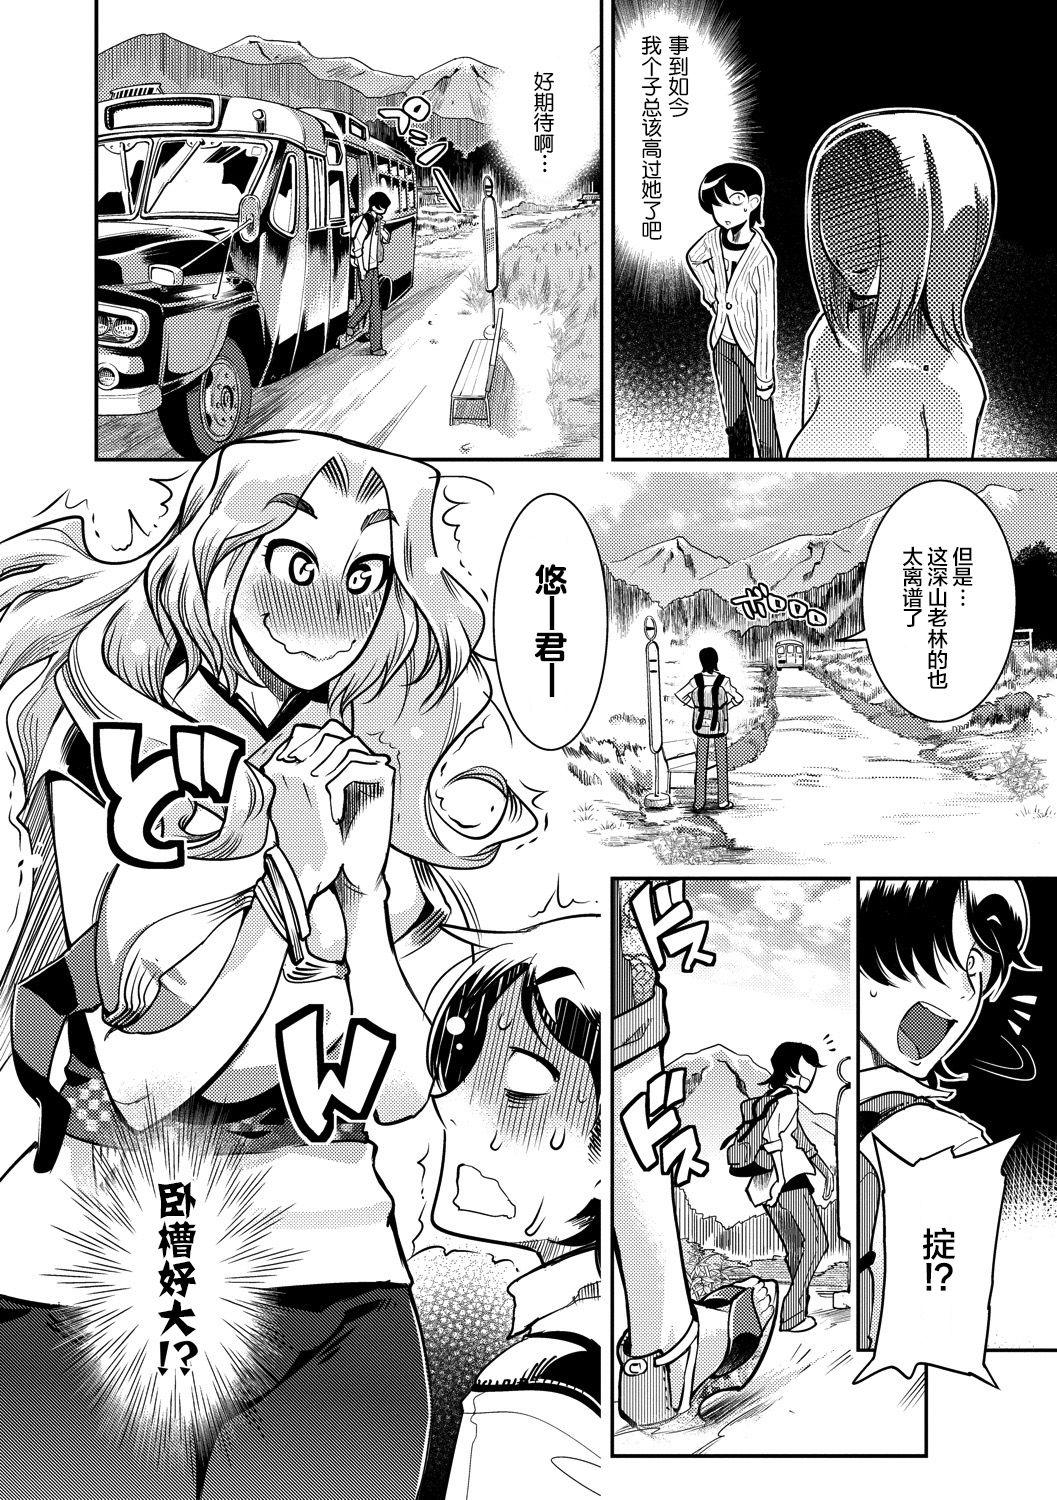 Body Yamato grande Ch. 1-4 Negra - Page 2